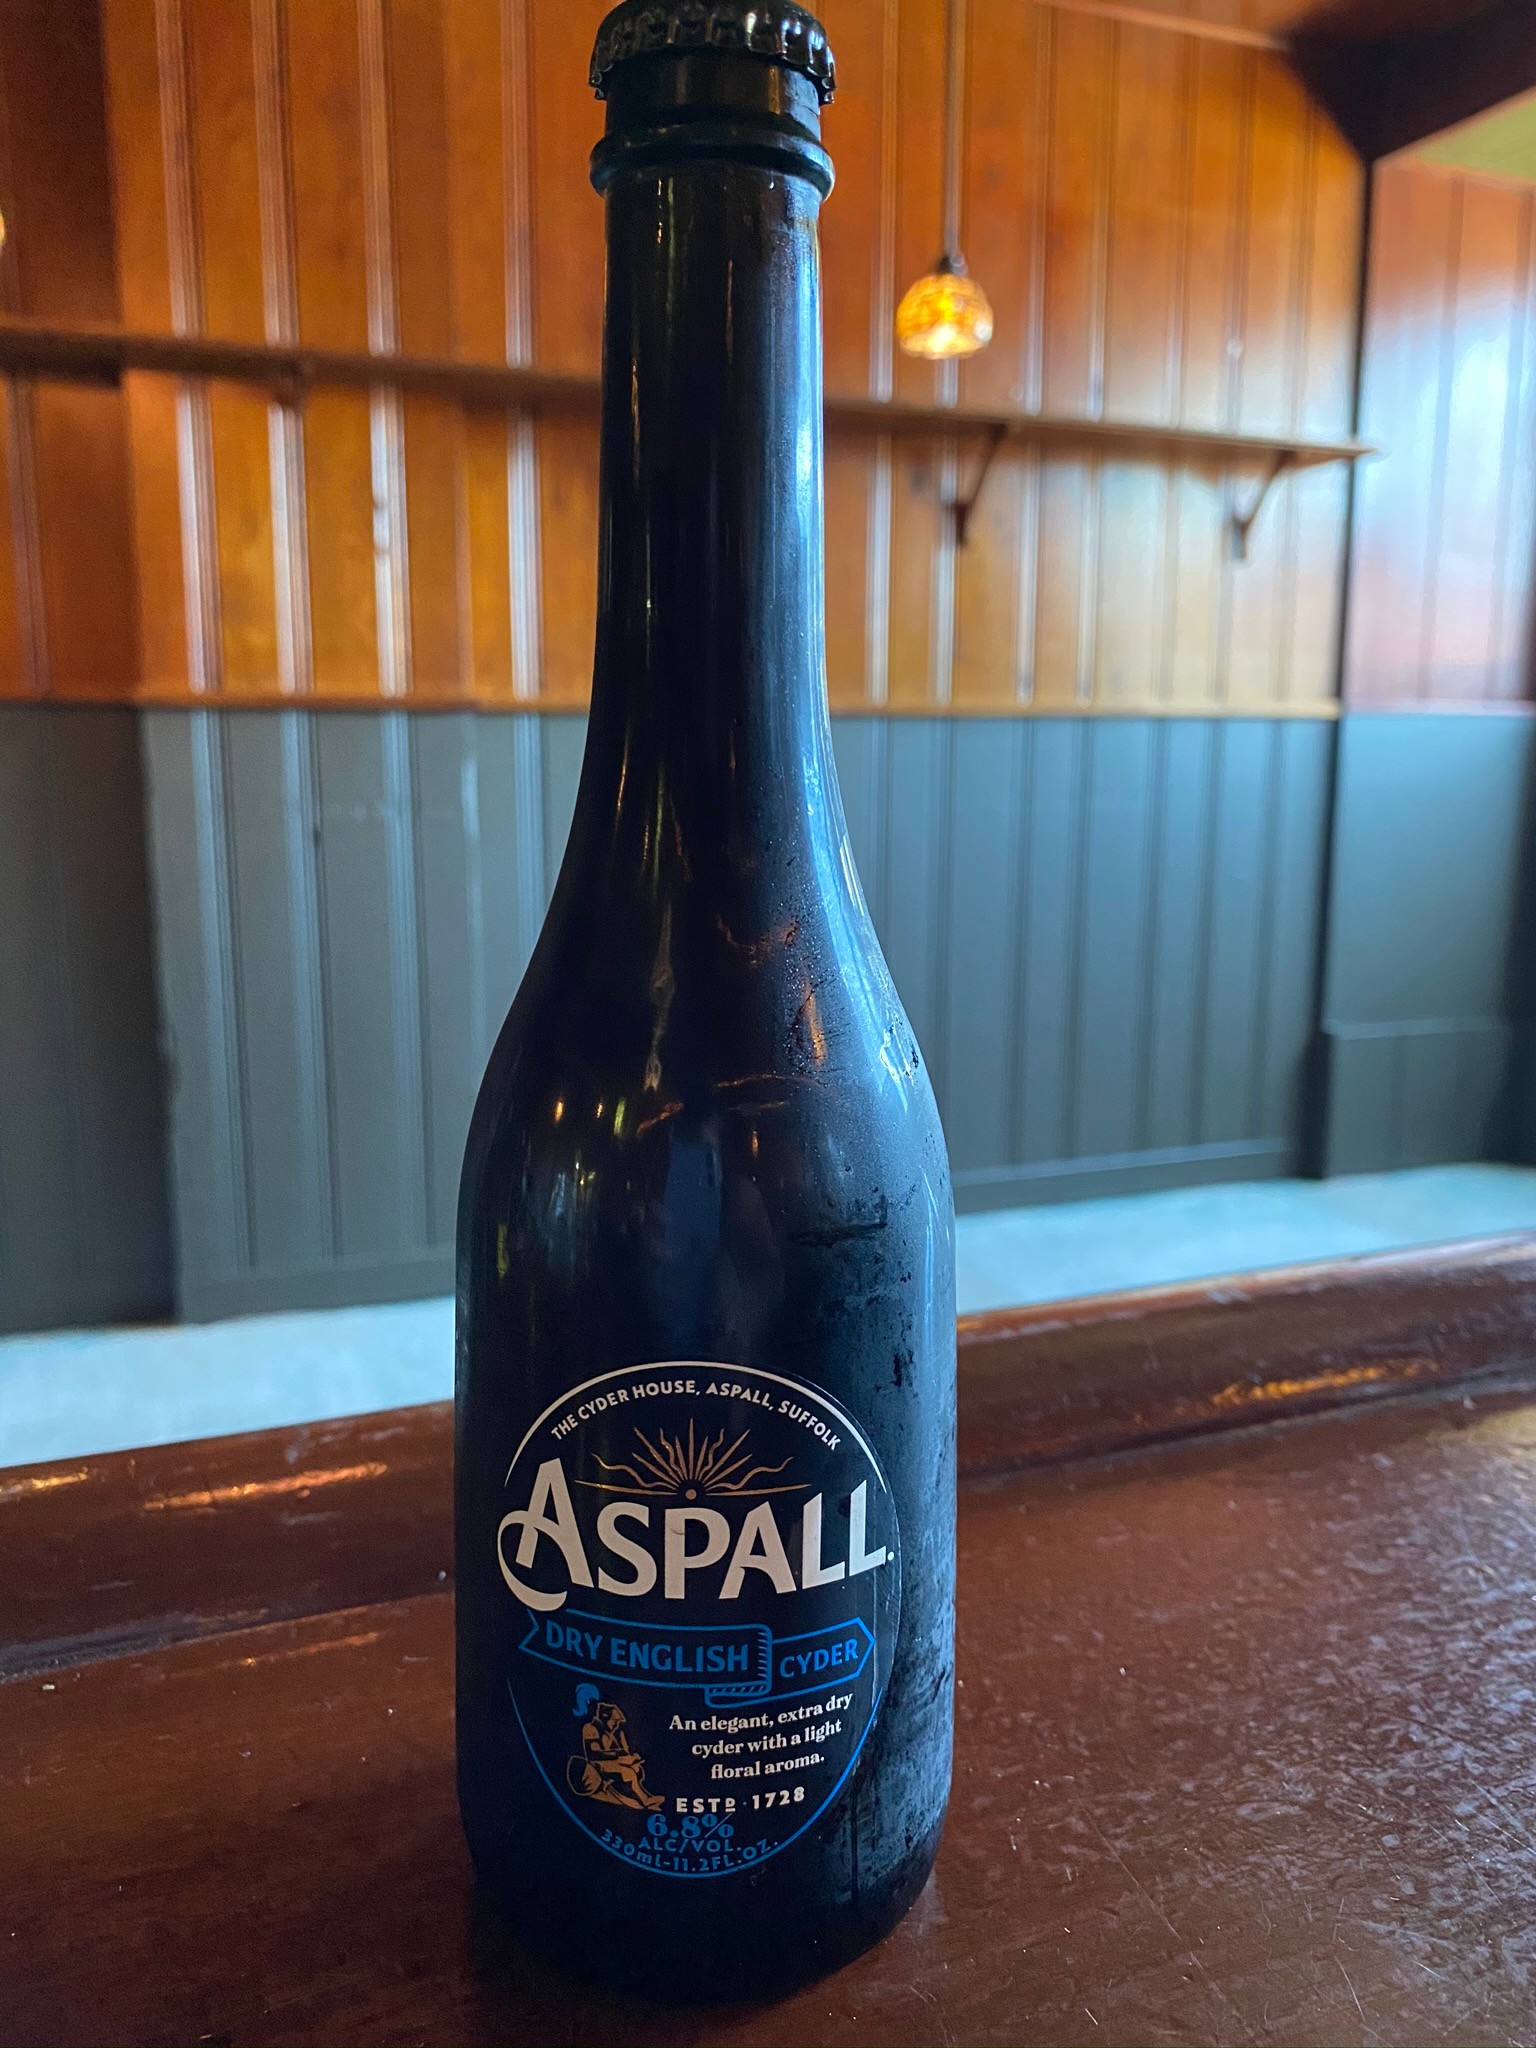 Aspall Dry Cider